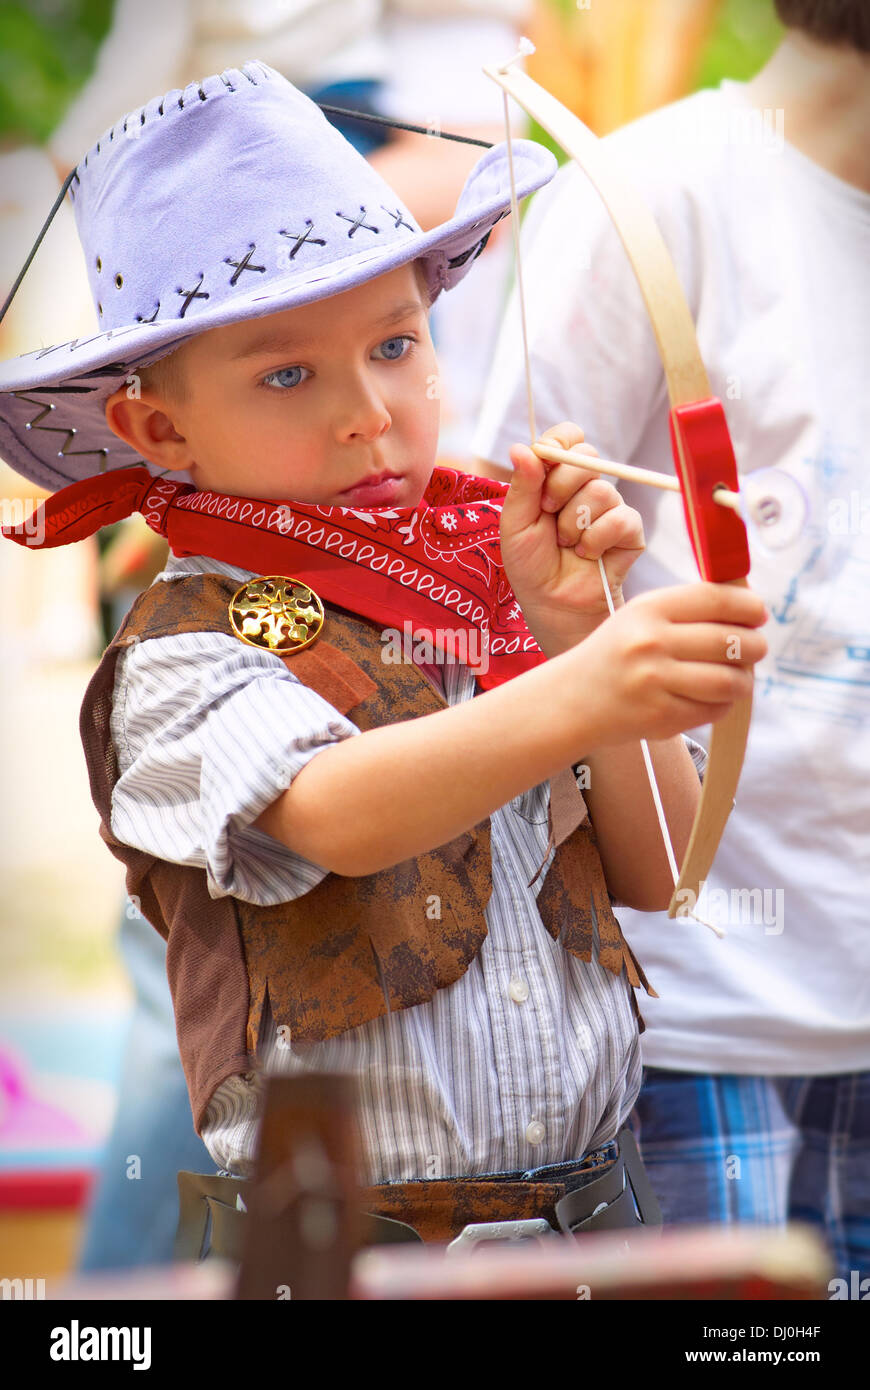 Little cowboy shoots a bow with serious calm gaze Stock Photo